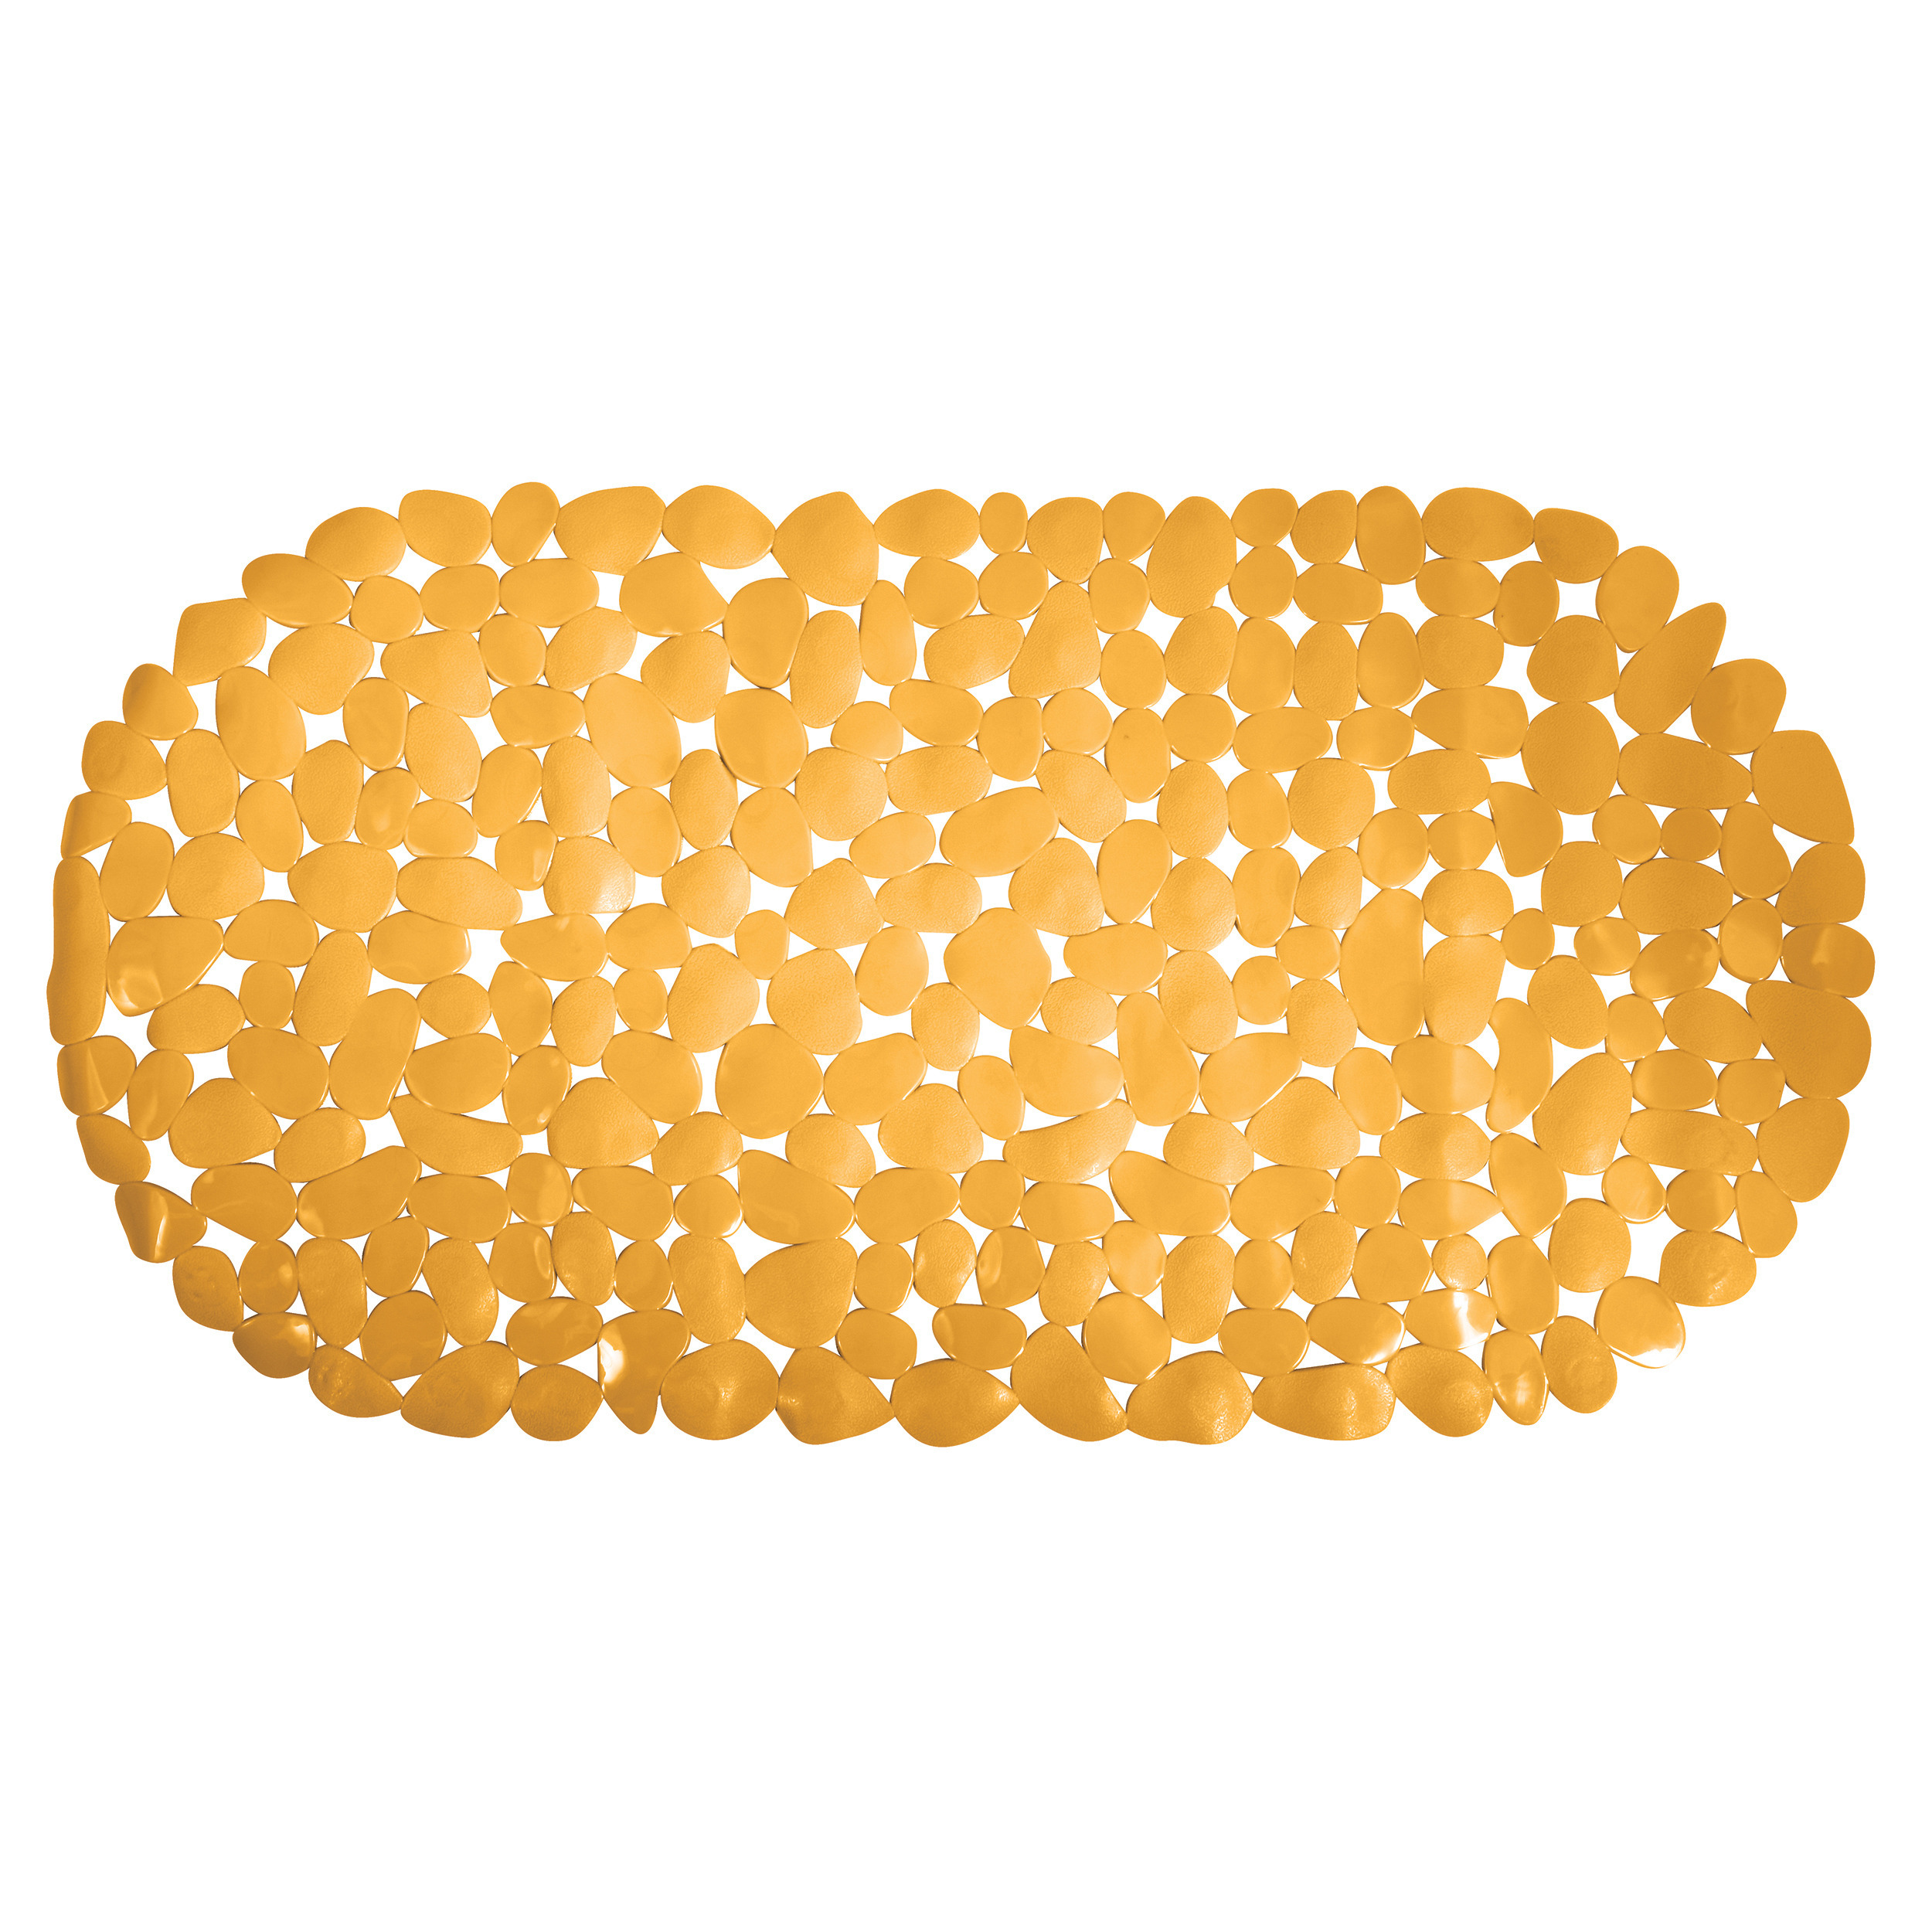 Douche-bad anti-slip mat badkamer pvc saffraan geel 35 x 68 cm ovaal